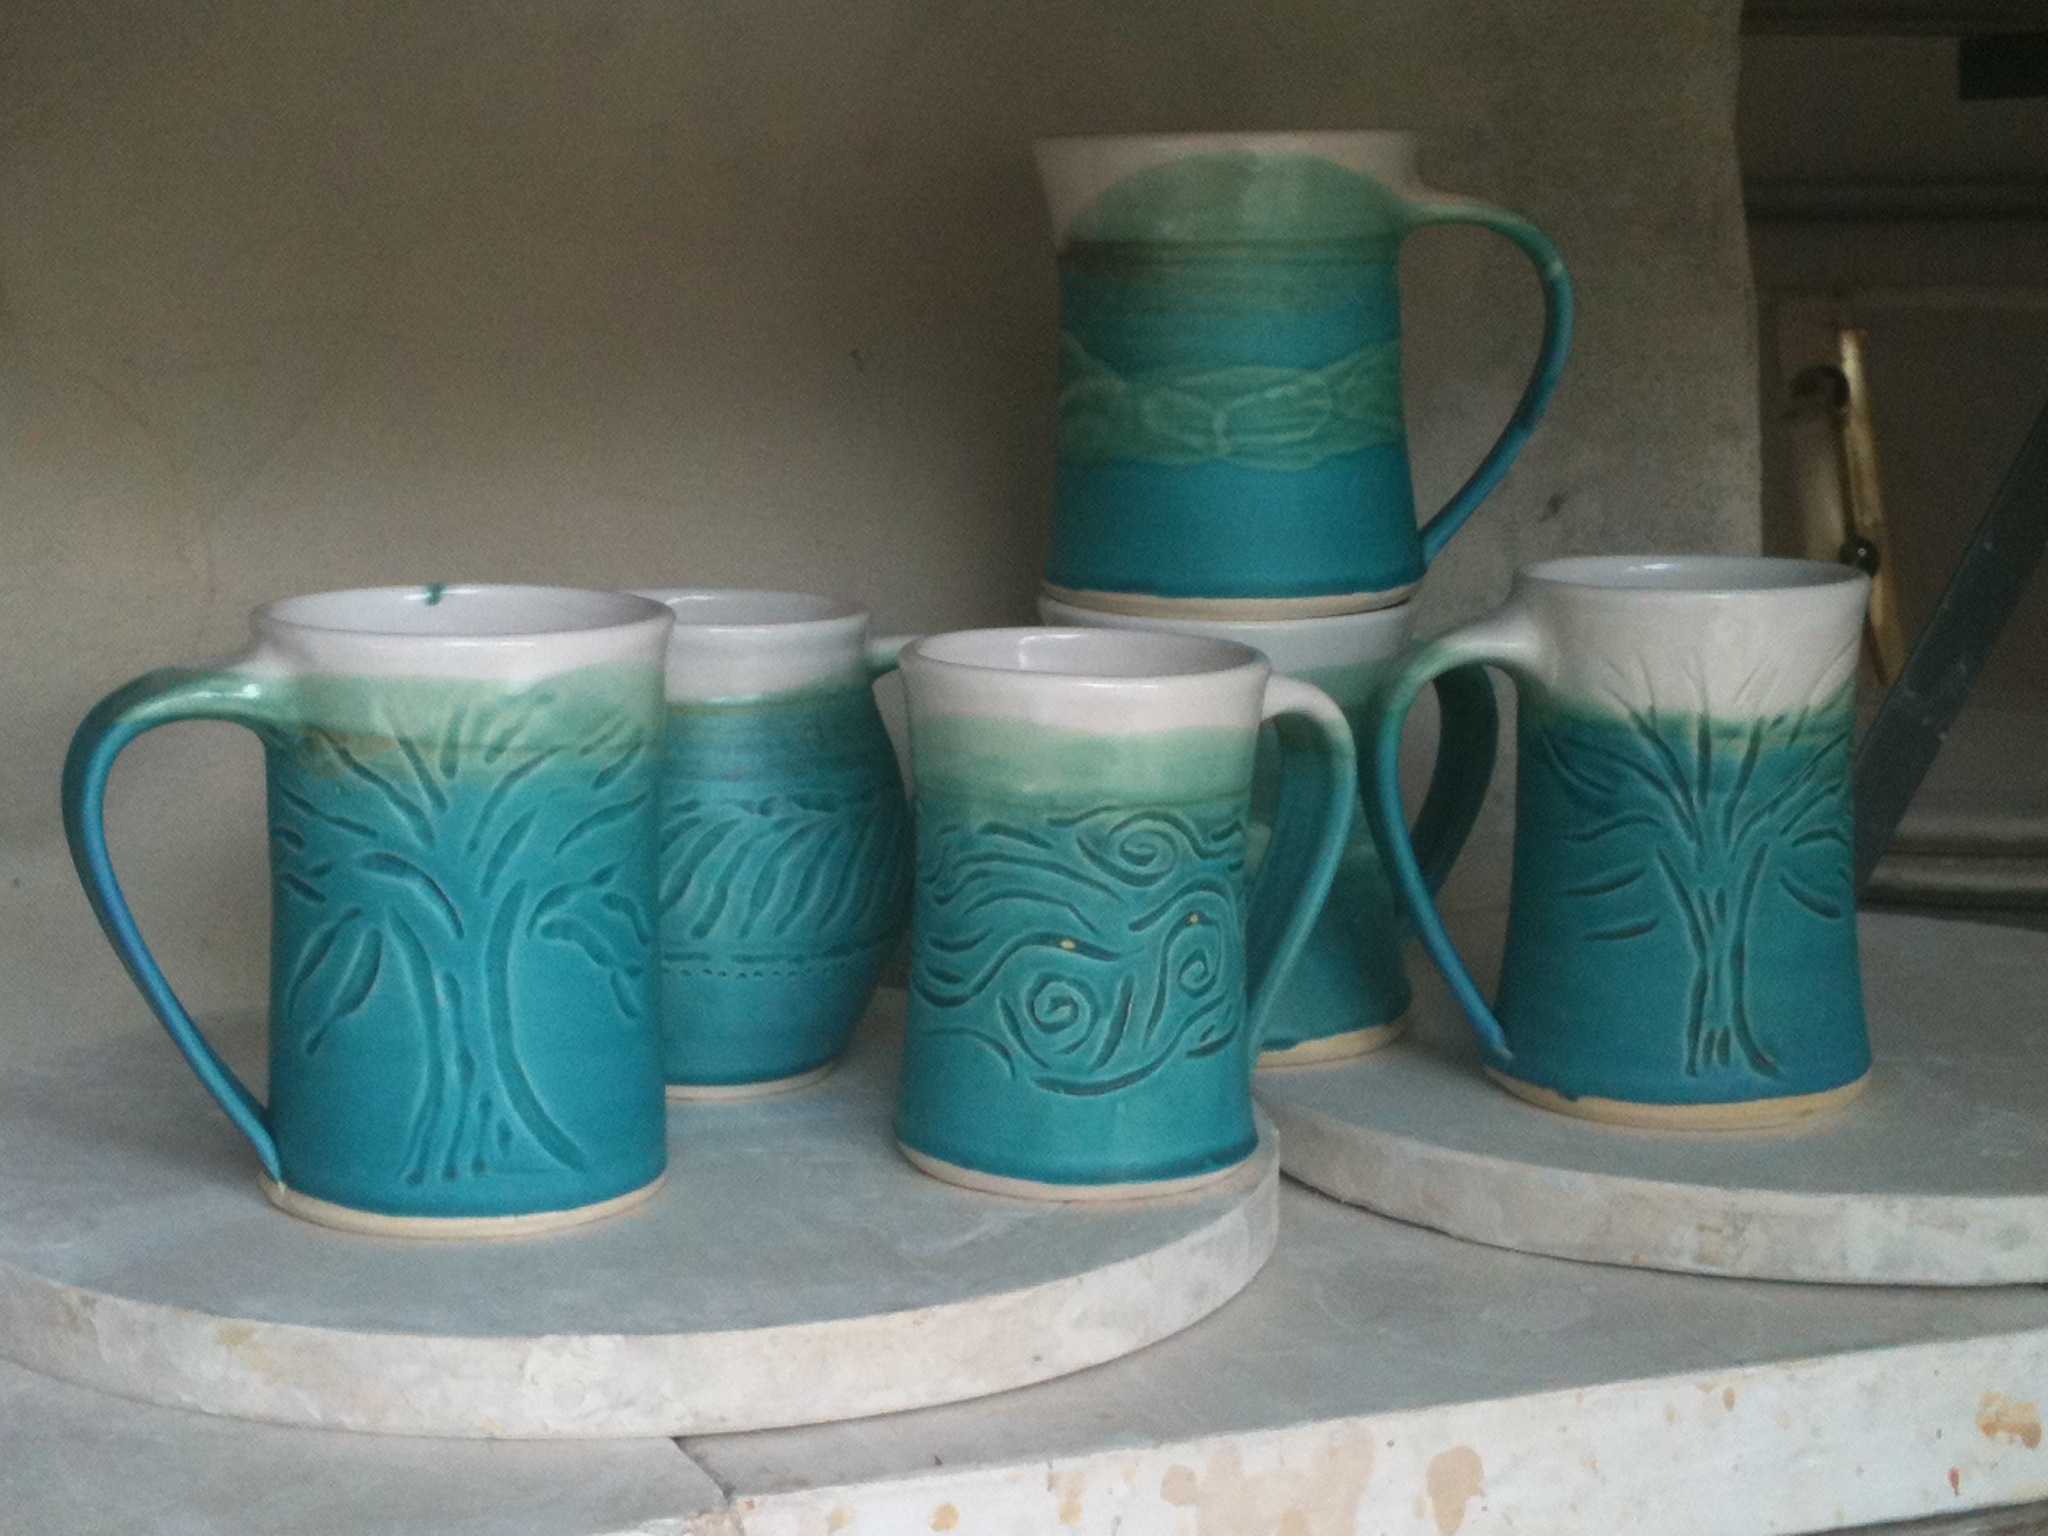 Carved mugs